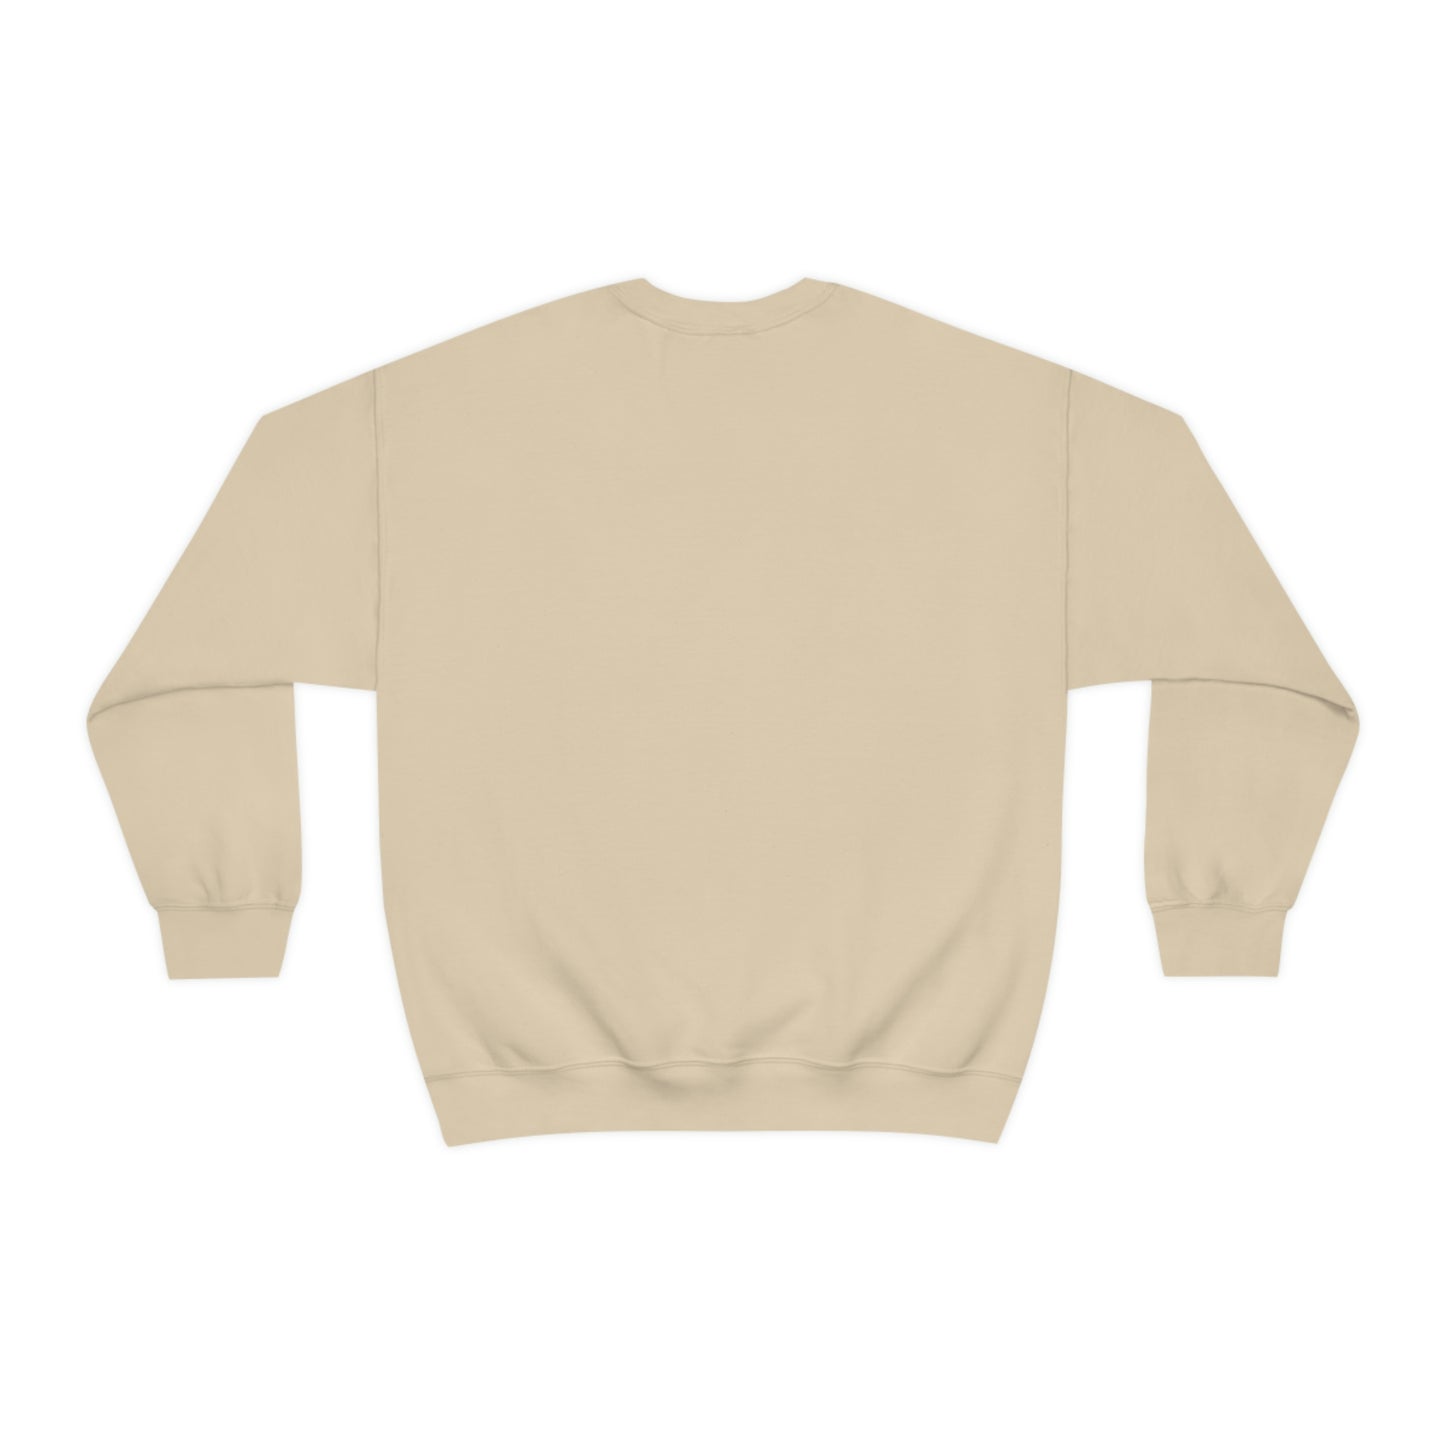 I need attention - Unisex Heavy Blend™ Crewneck Sweatshirt